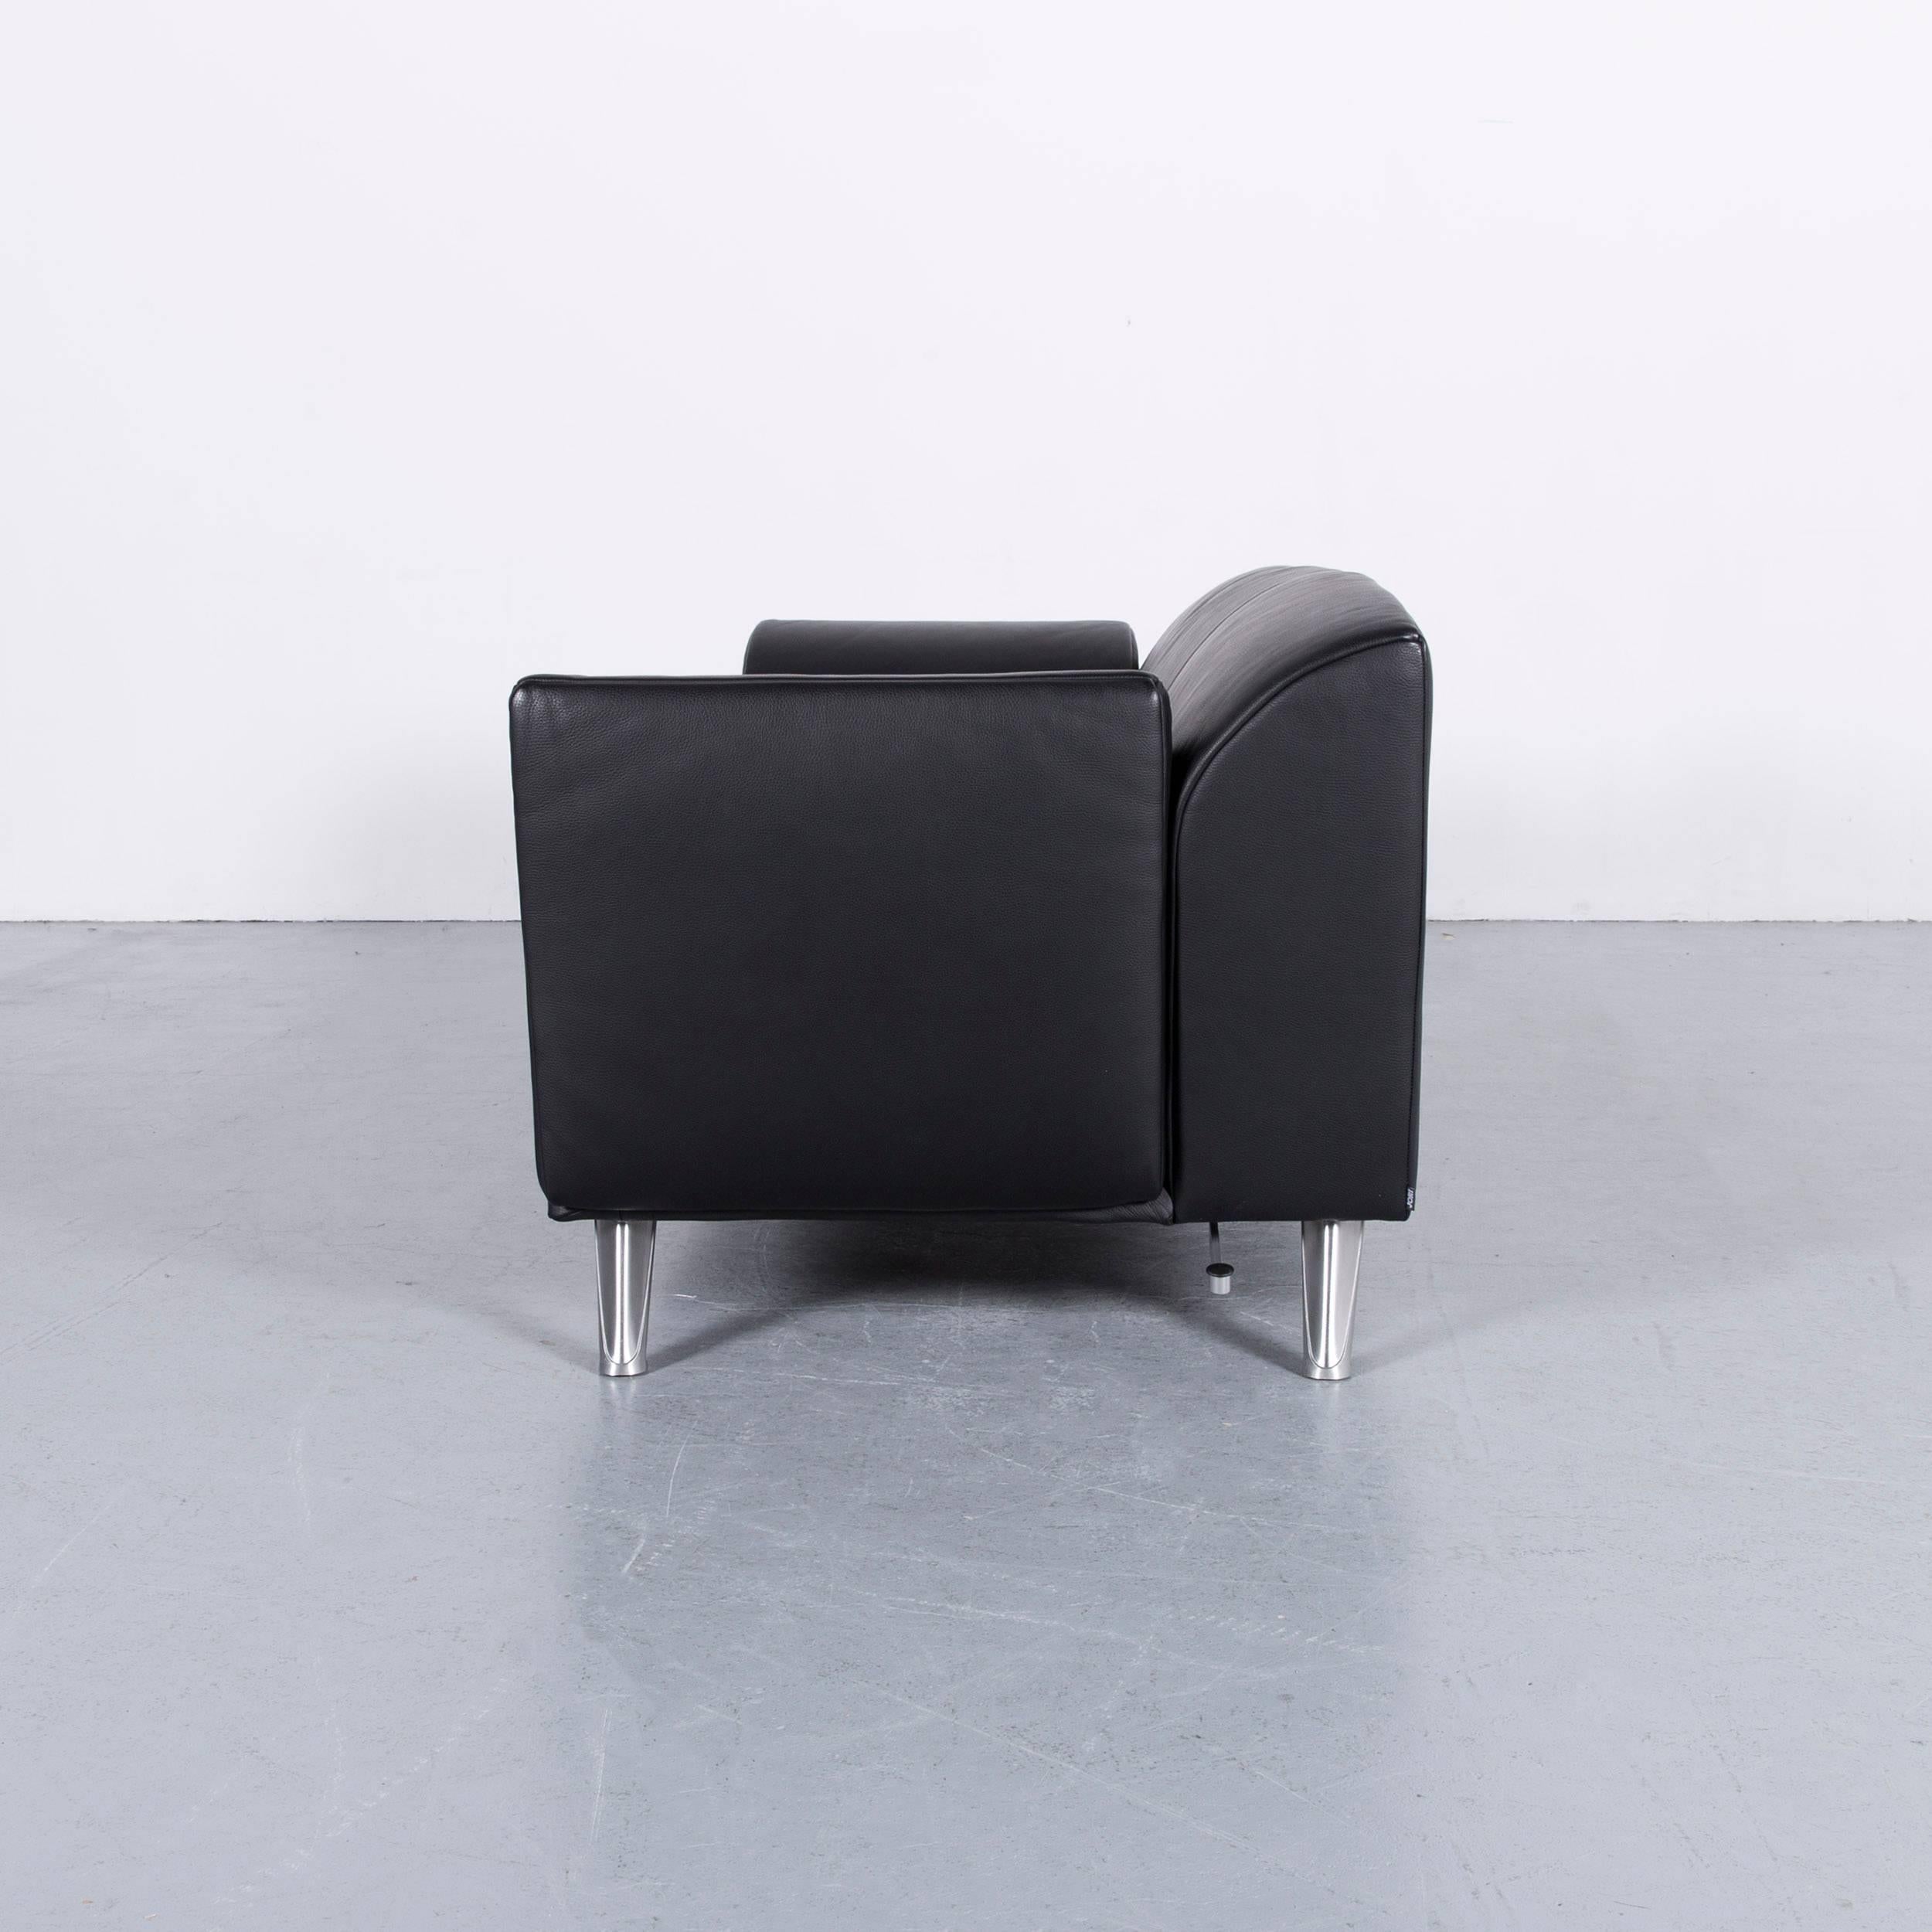 Jori JR 9700 Leather Sofa Black Three-Seat Couch 8